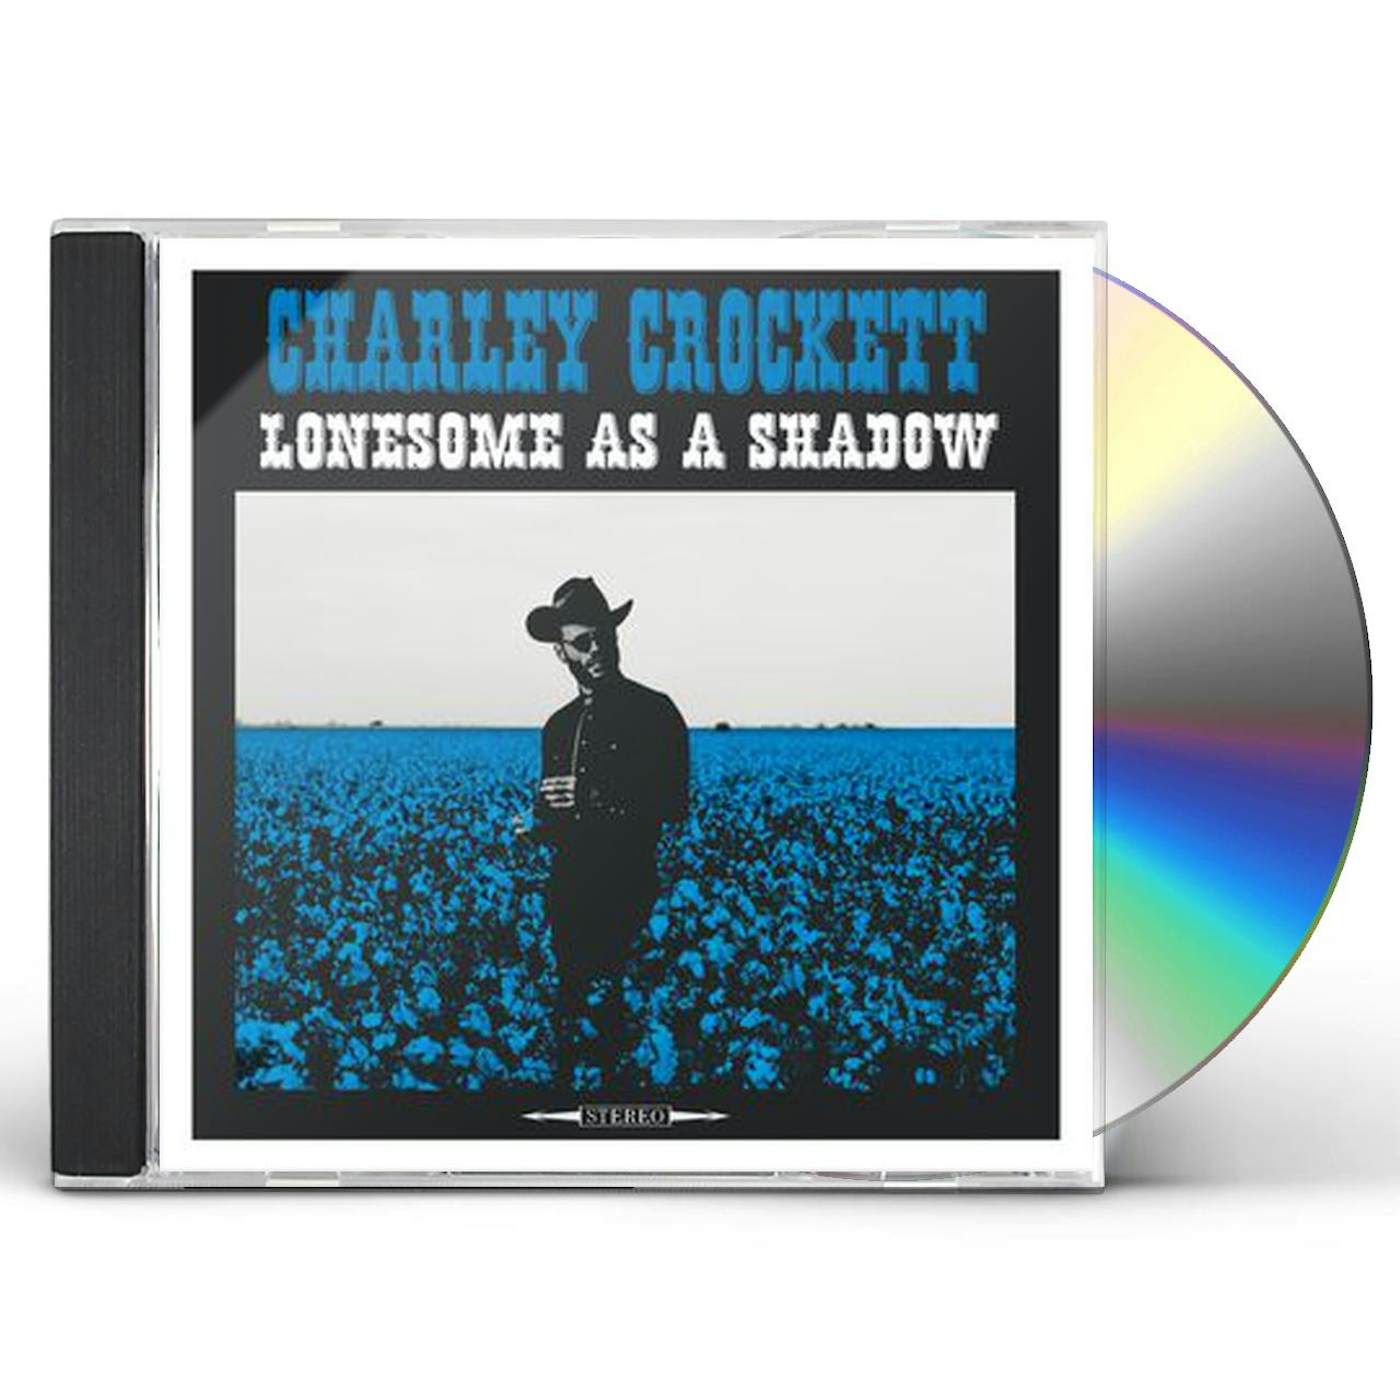 Charley Crockett LONESOME AS A SHADOW CD